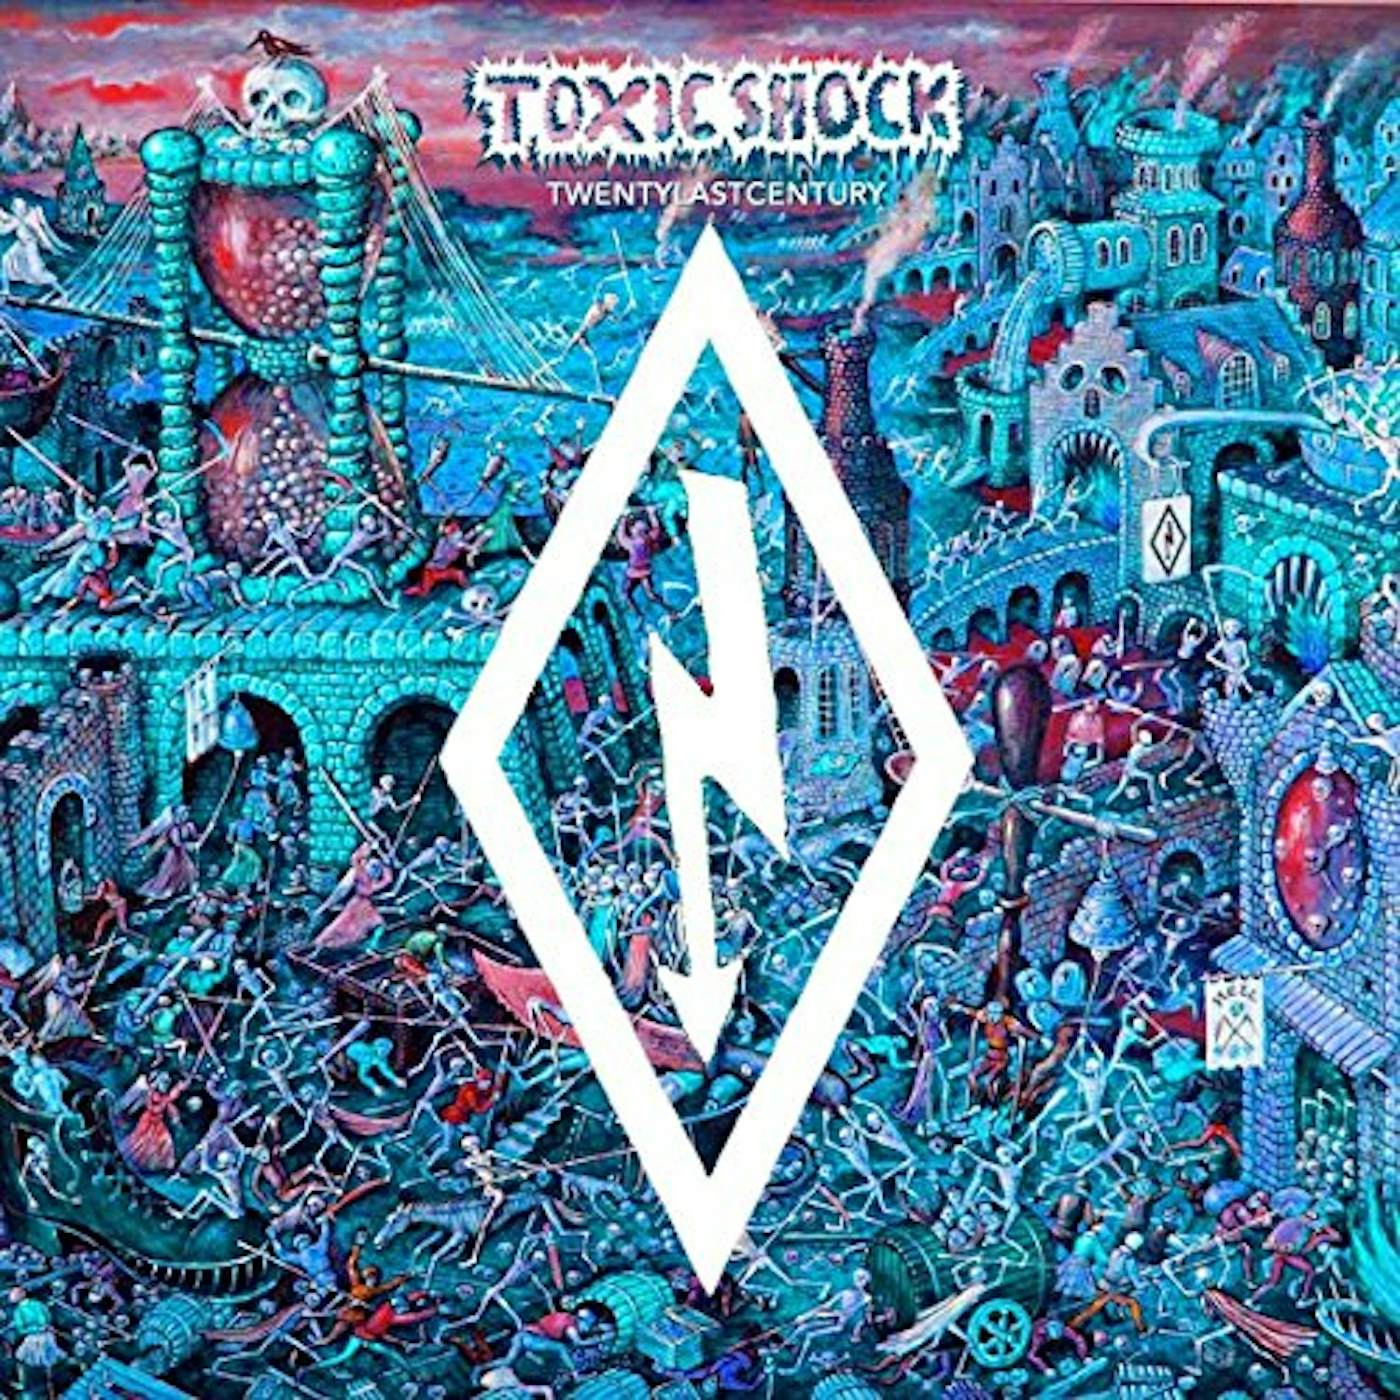 Toxic Shock Twentylastcentury Vinyl Record